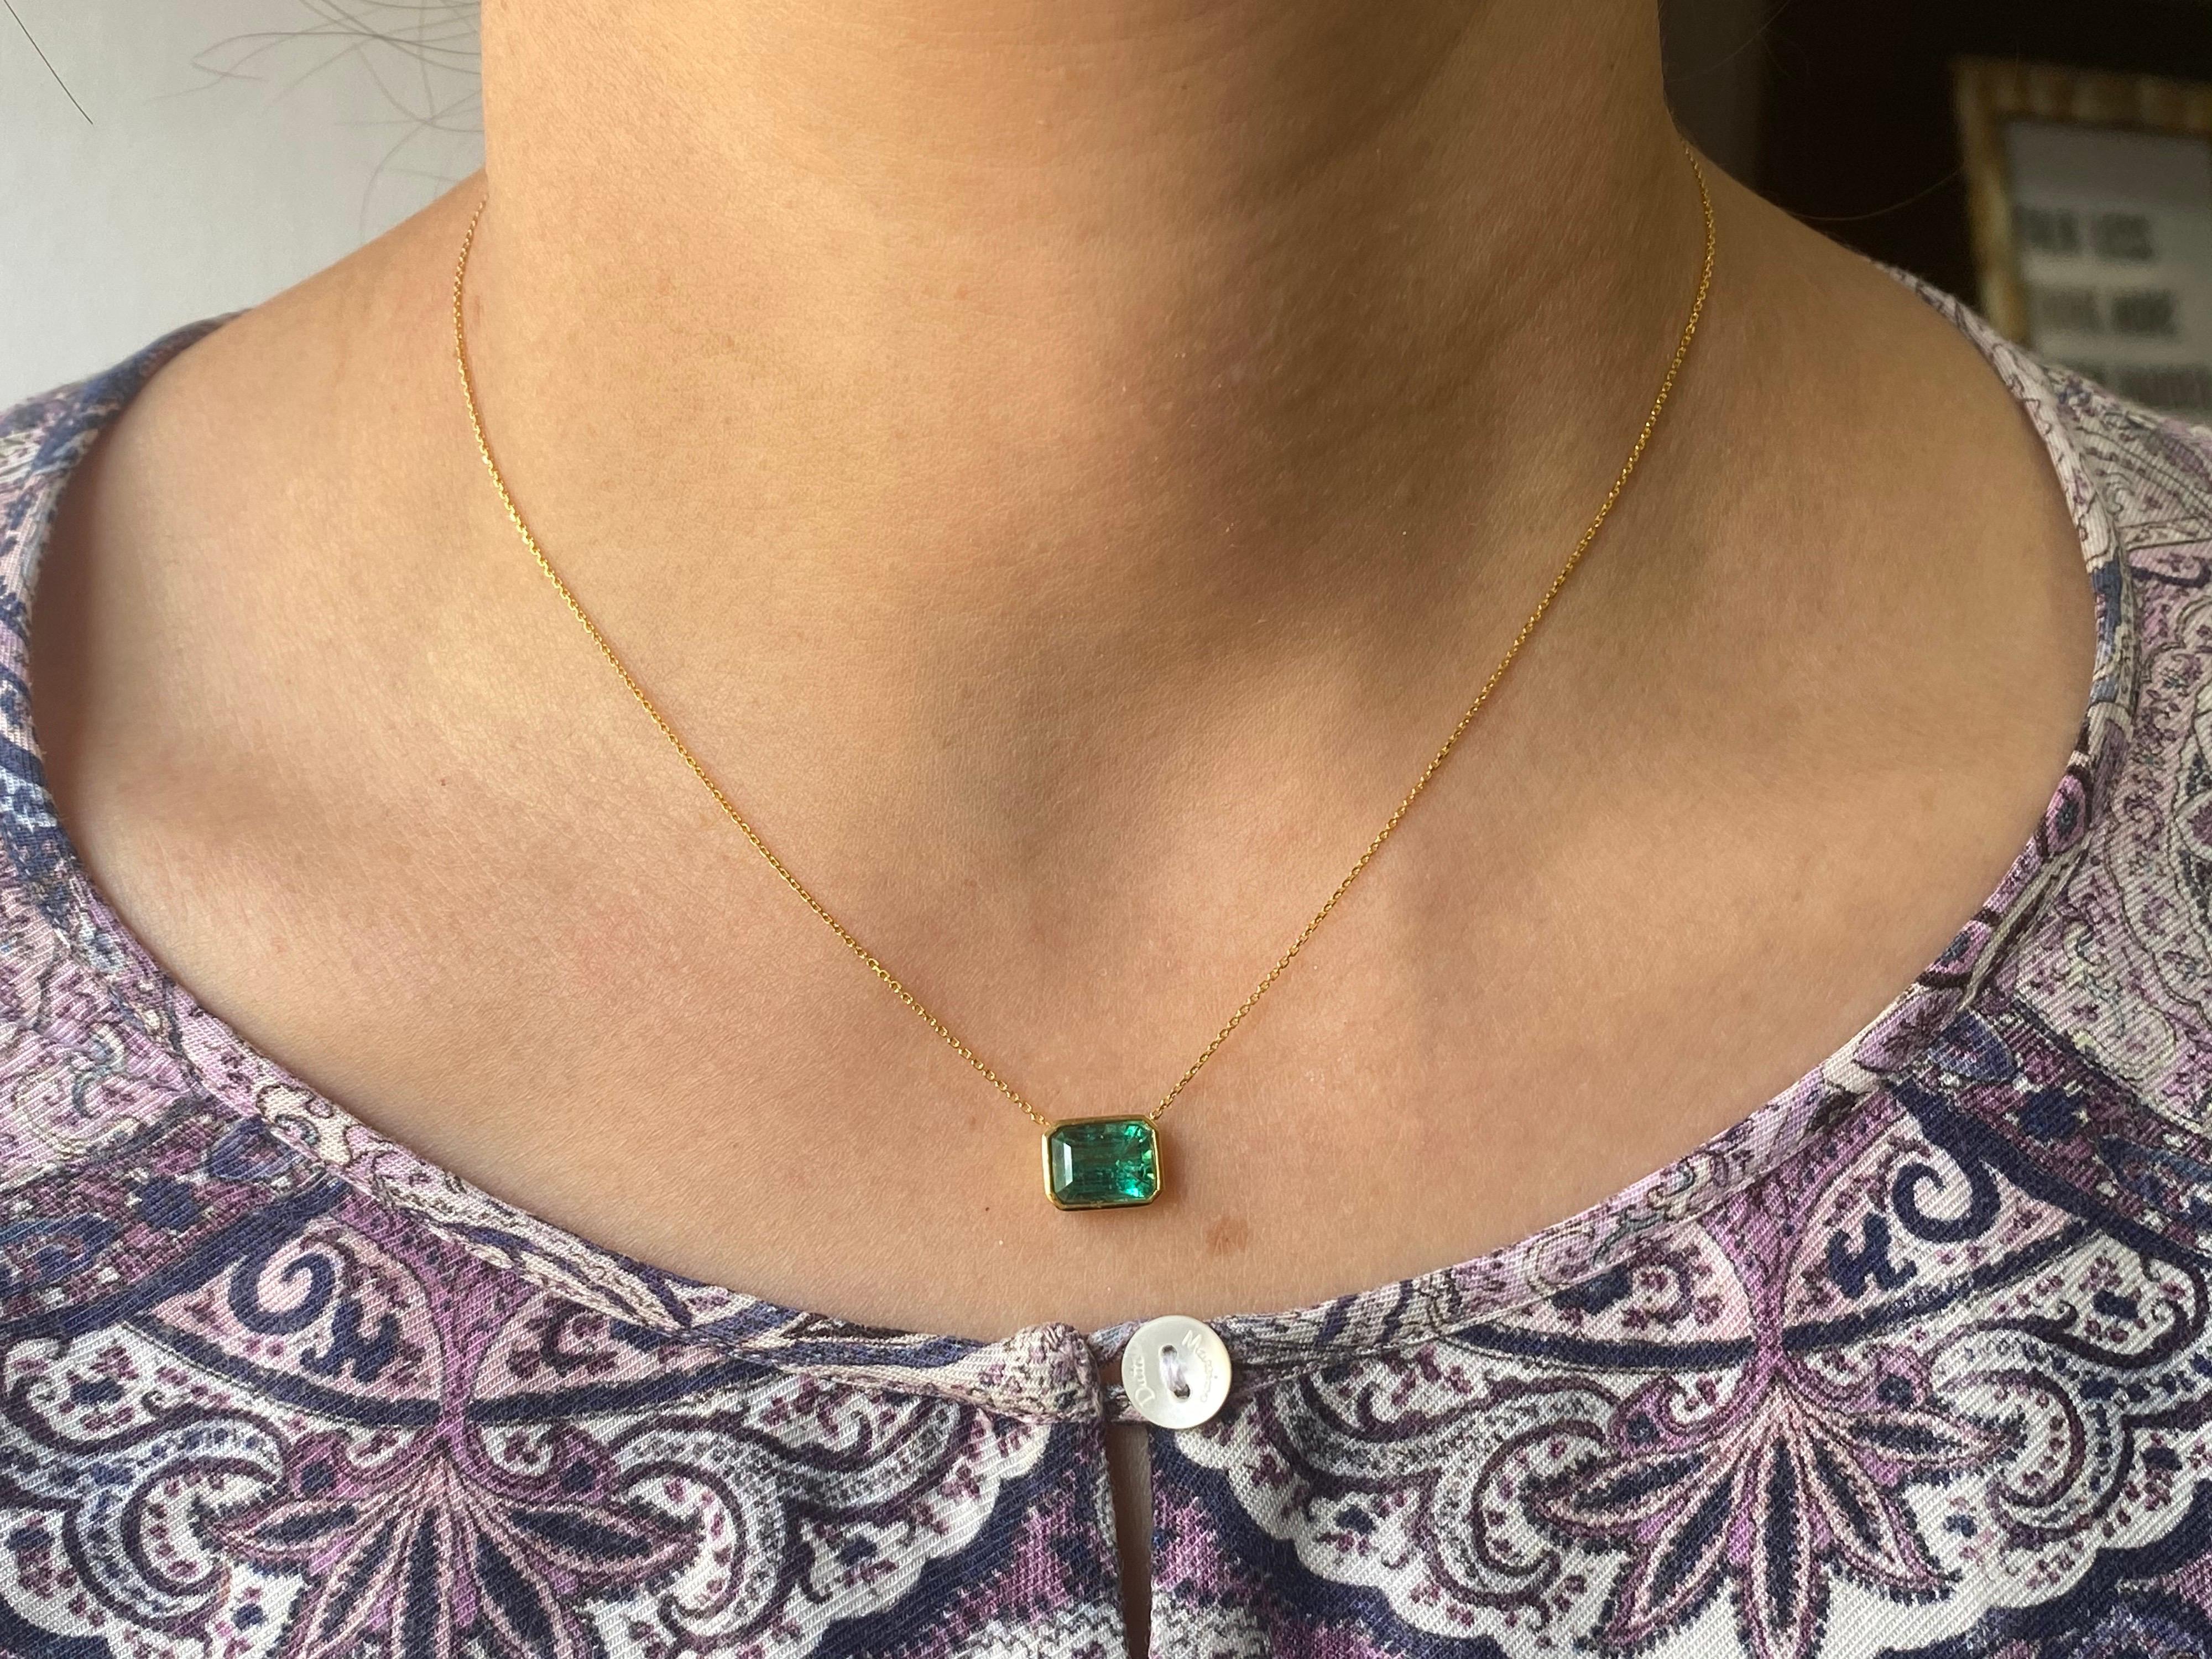 Certified 1.37 Carat Emerald Cut Colombian Emerald Pendant Chain Necklace 1